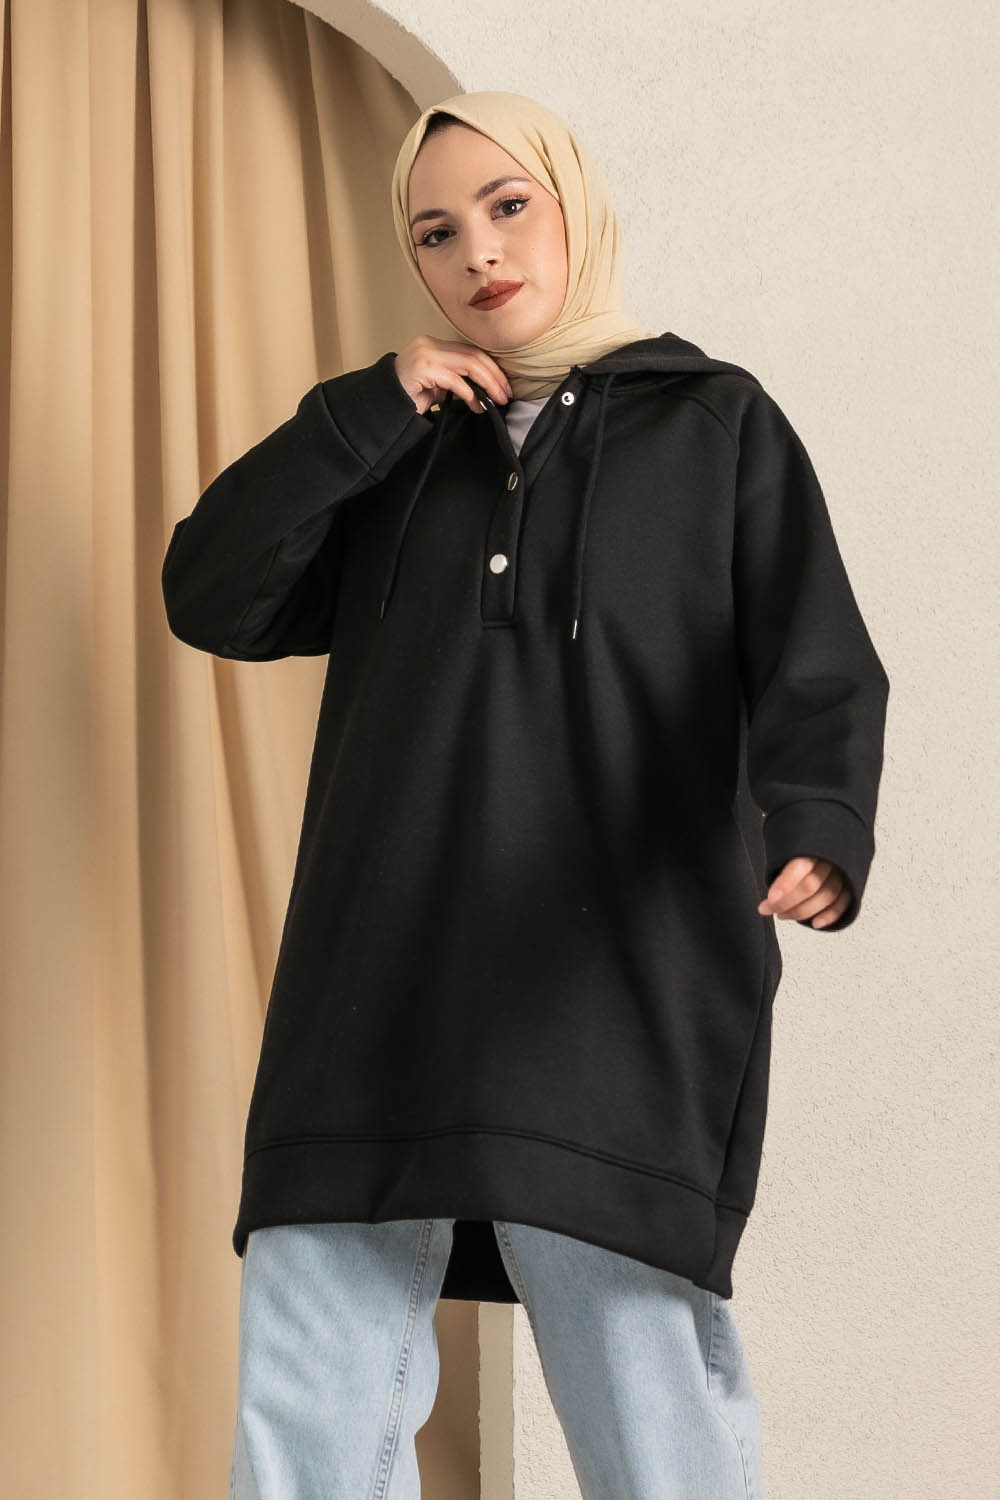 Sykooria Women's Dress Pullover Long Sleeve Basic Sweatshirts Hoodie Black  XL Hooded : : Fashion